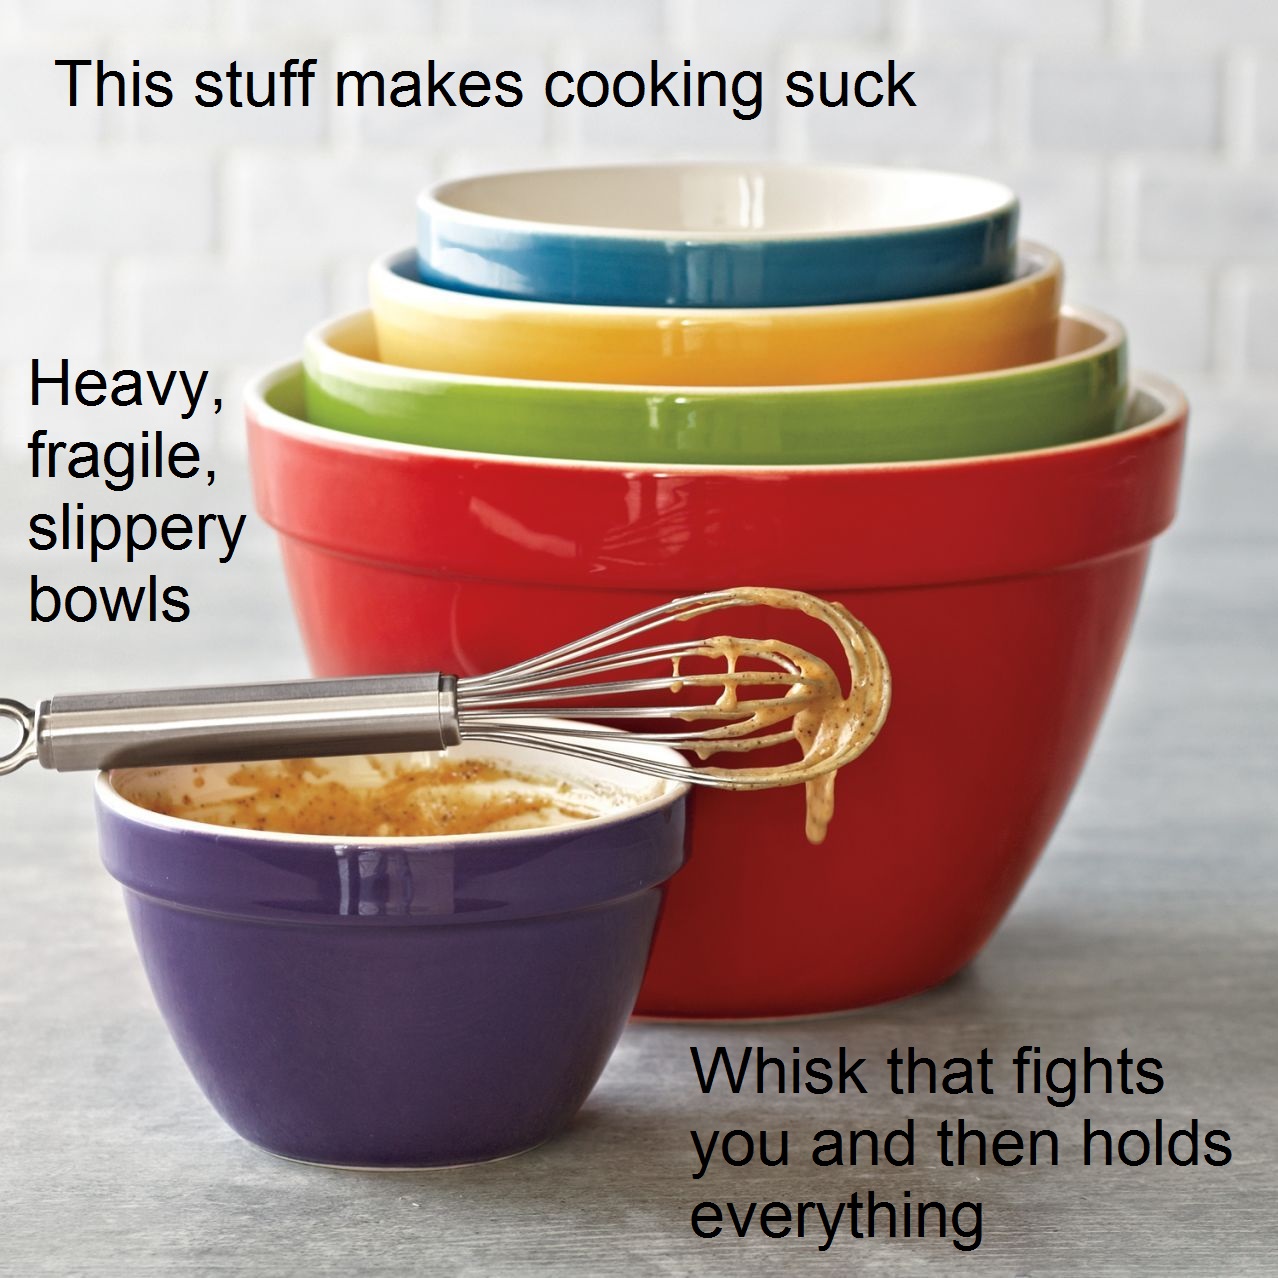 Don't buy ceramic bowls